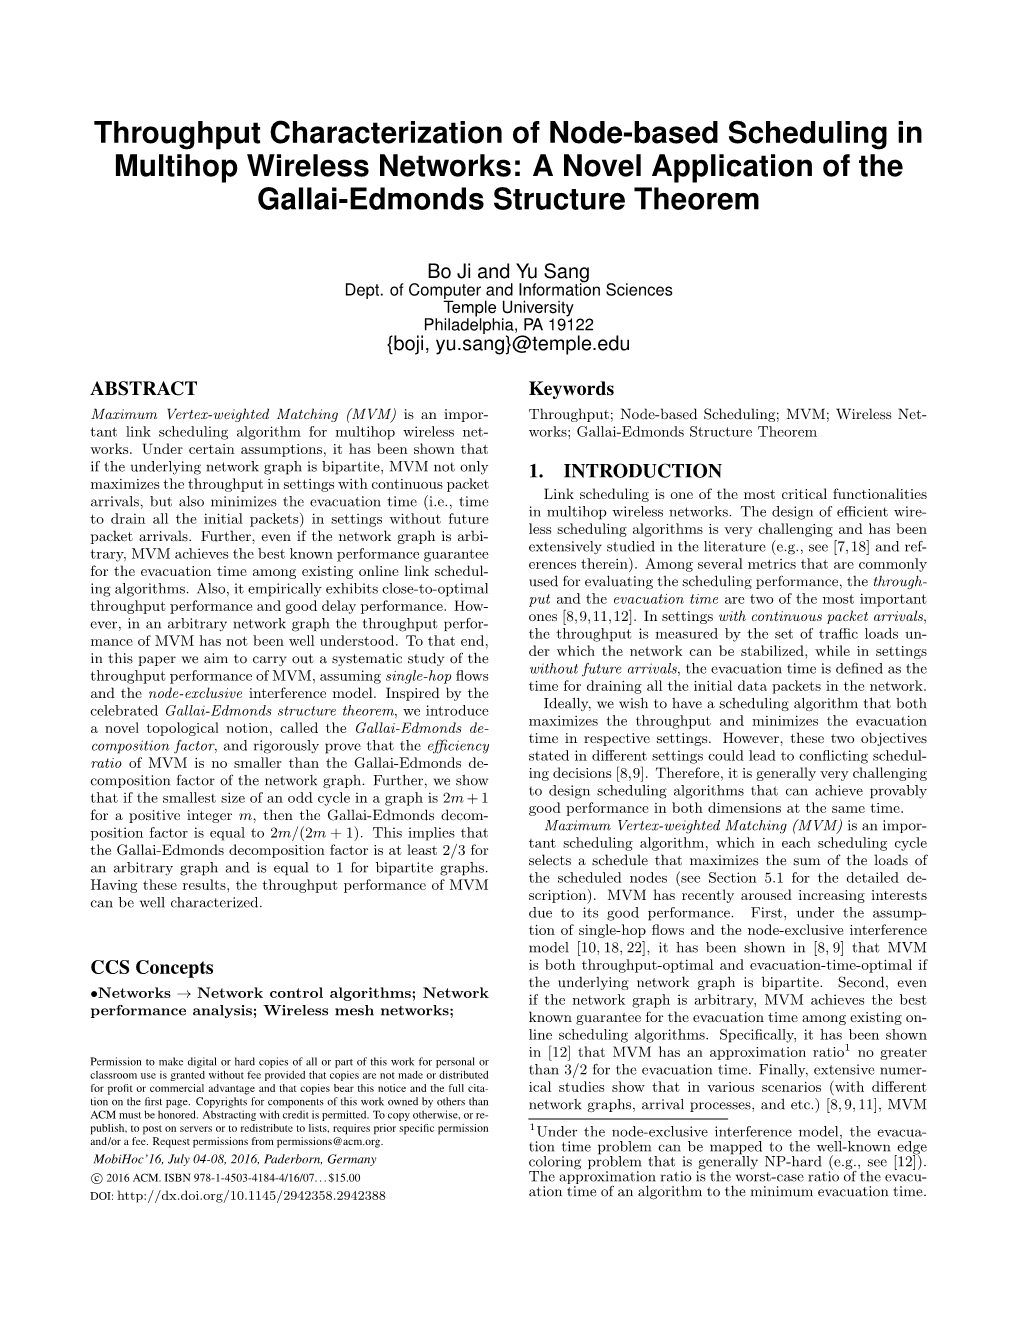 A Novel Application of the Gallai-Edmonds Structure Theorem